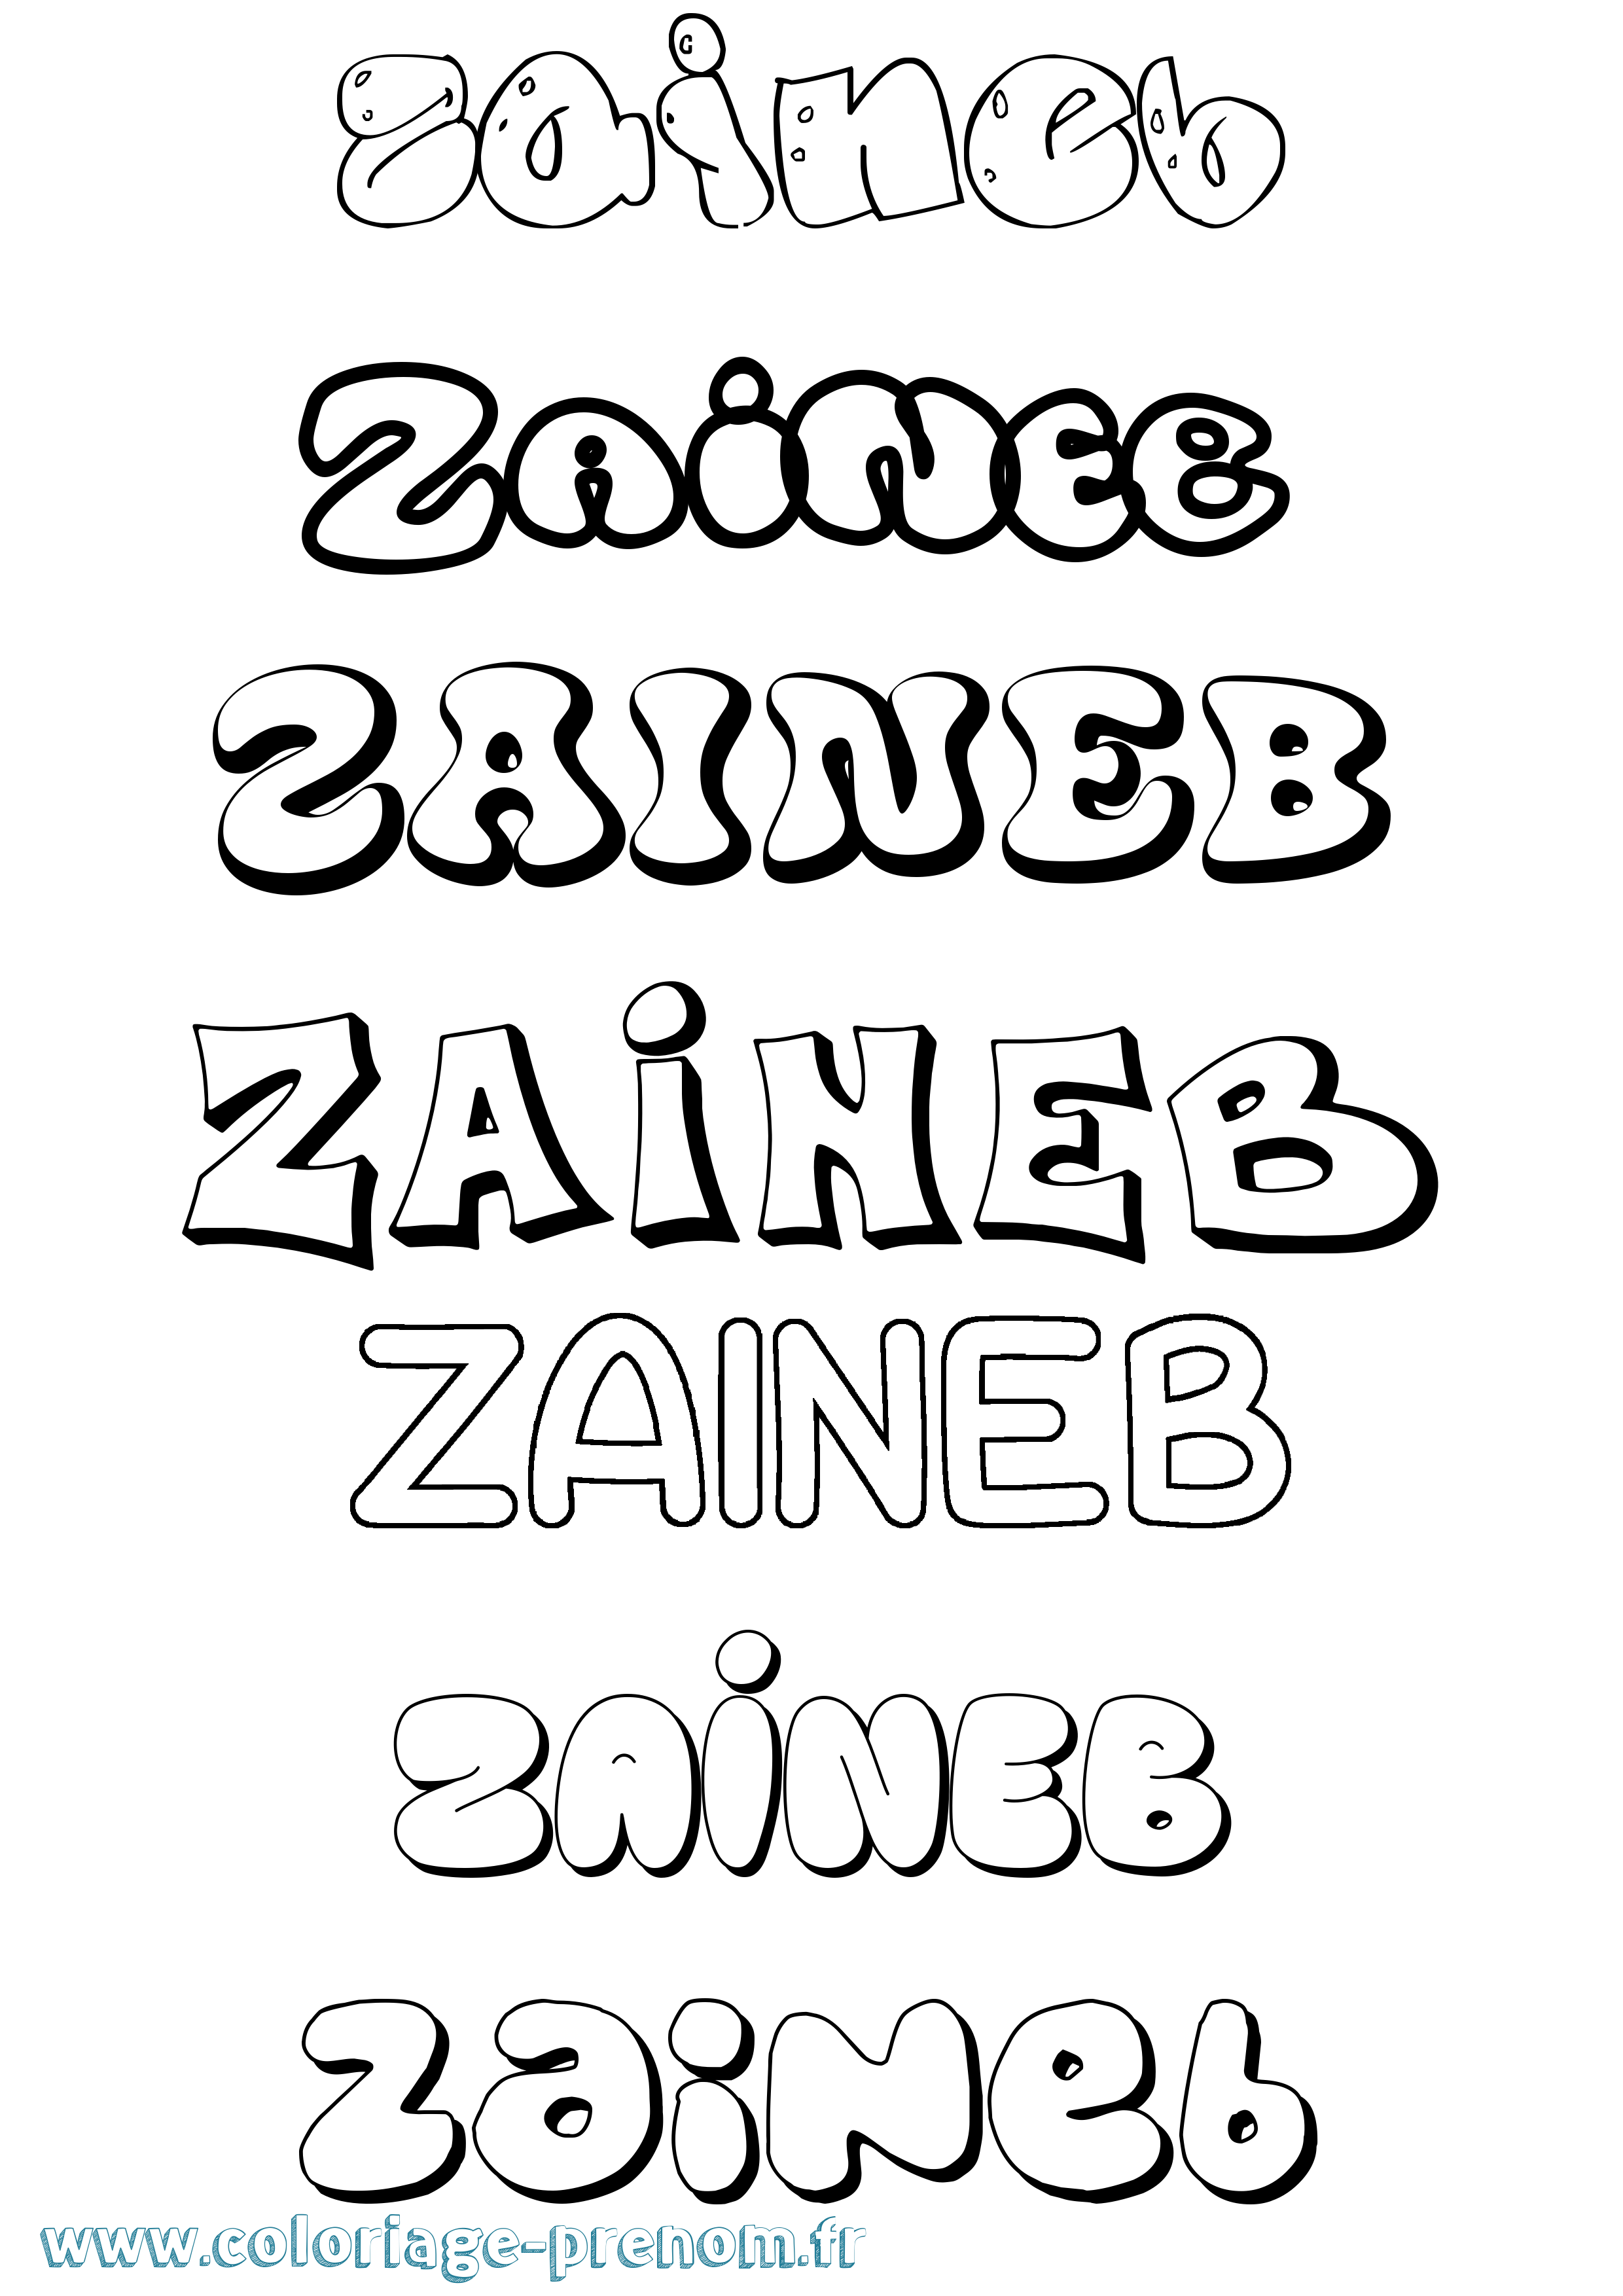 Coloriage prénom Zaineb Bubble